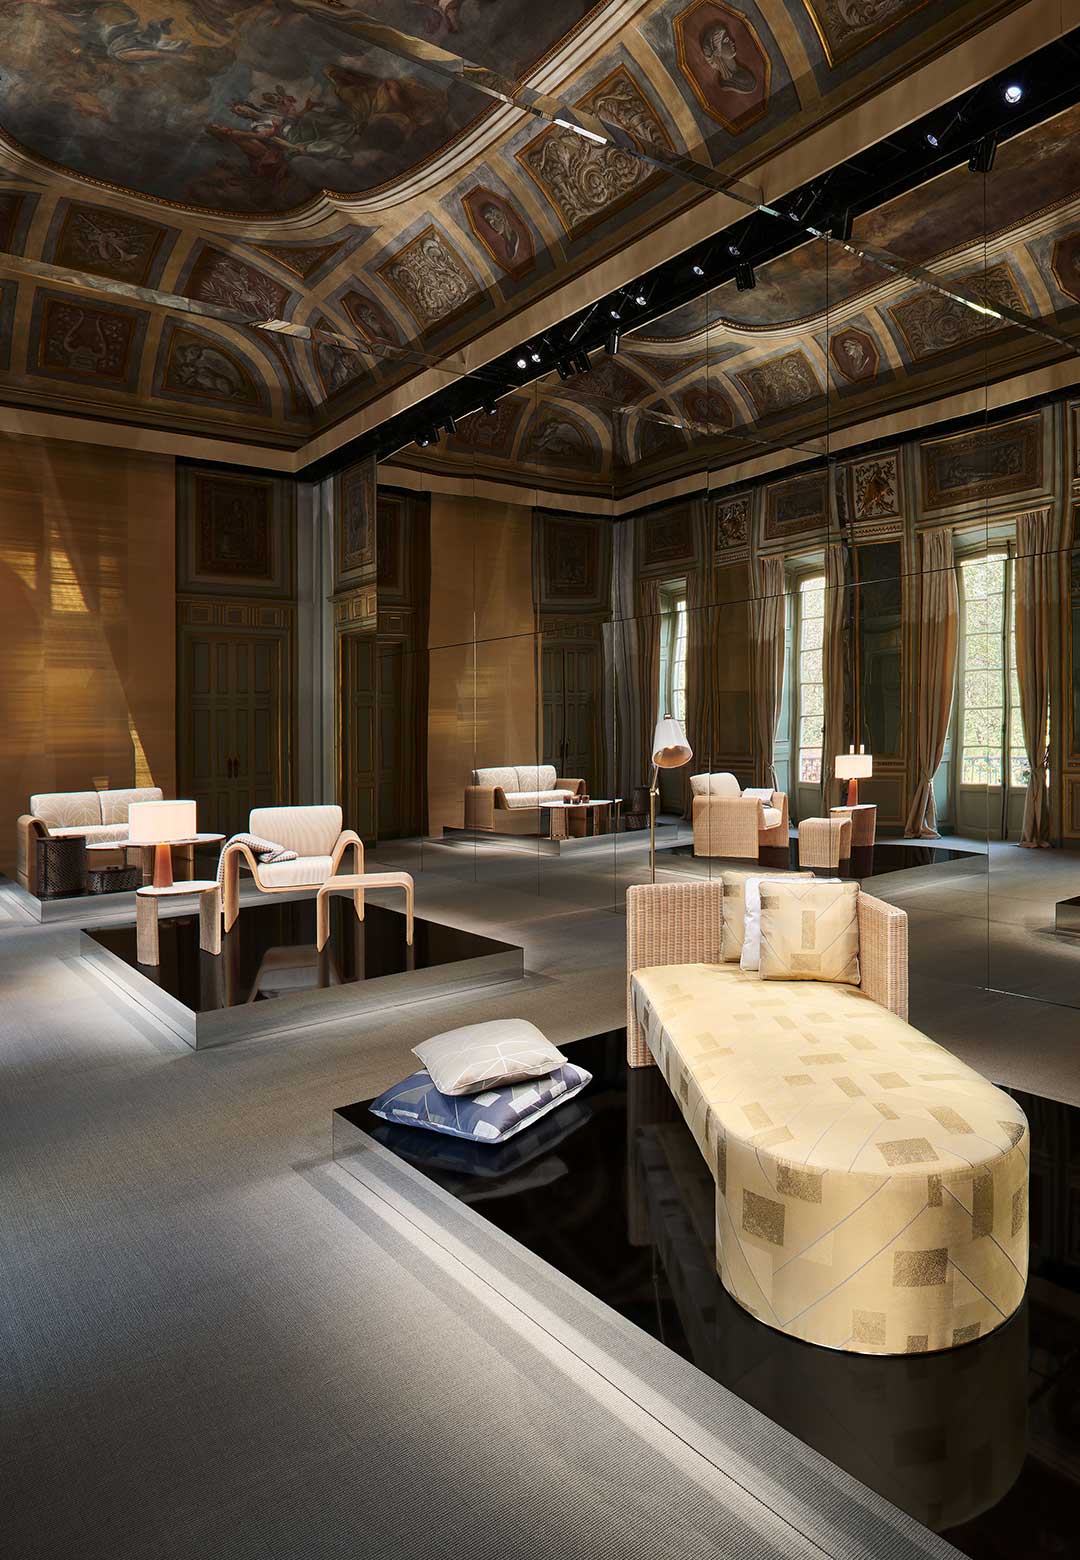 Armani/Casa: a foray into furniture and furnishings at Milan